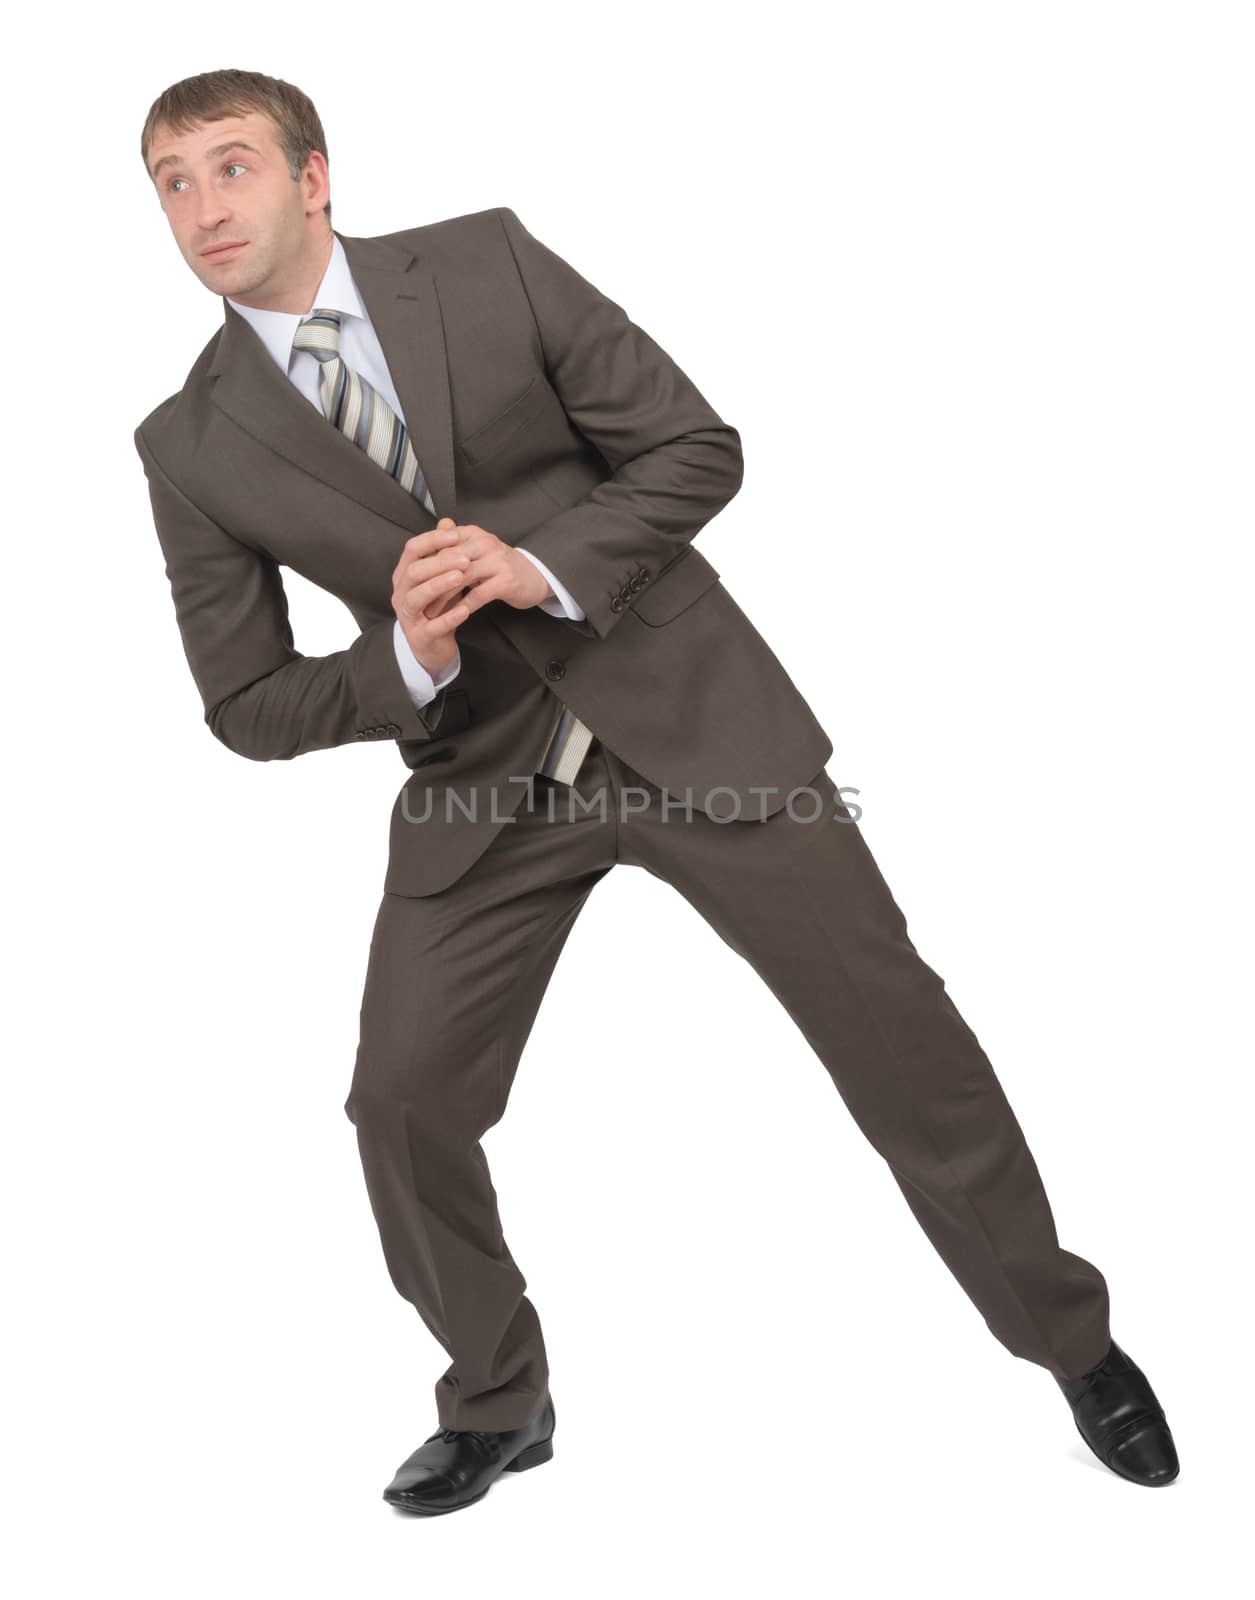 Businessman pushing empty space with elbowon isolated white background